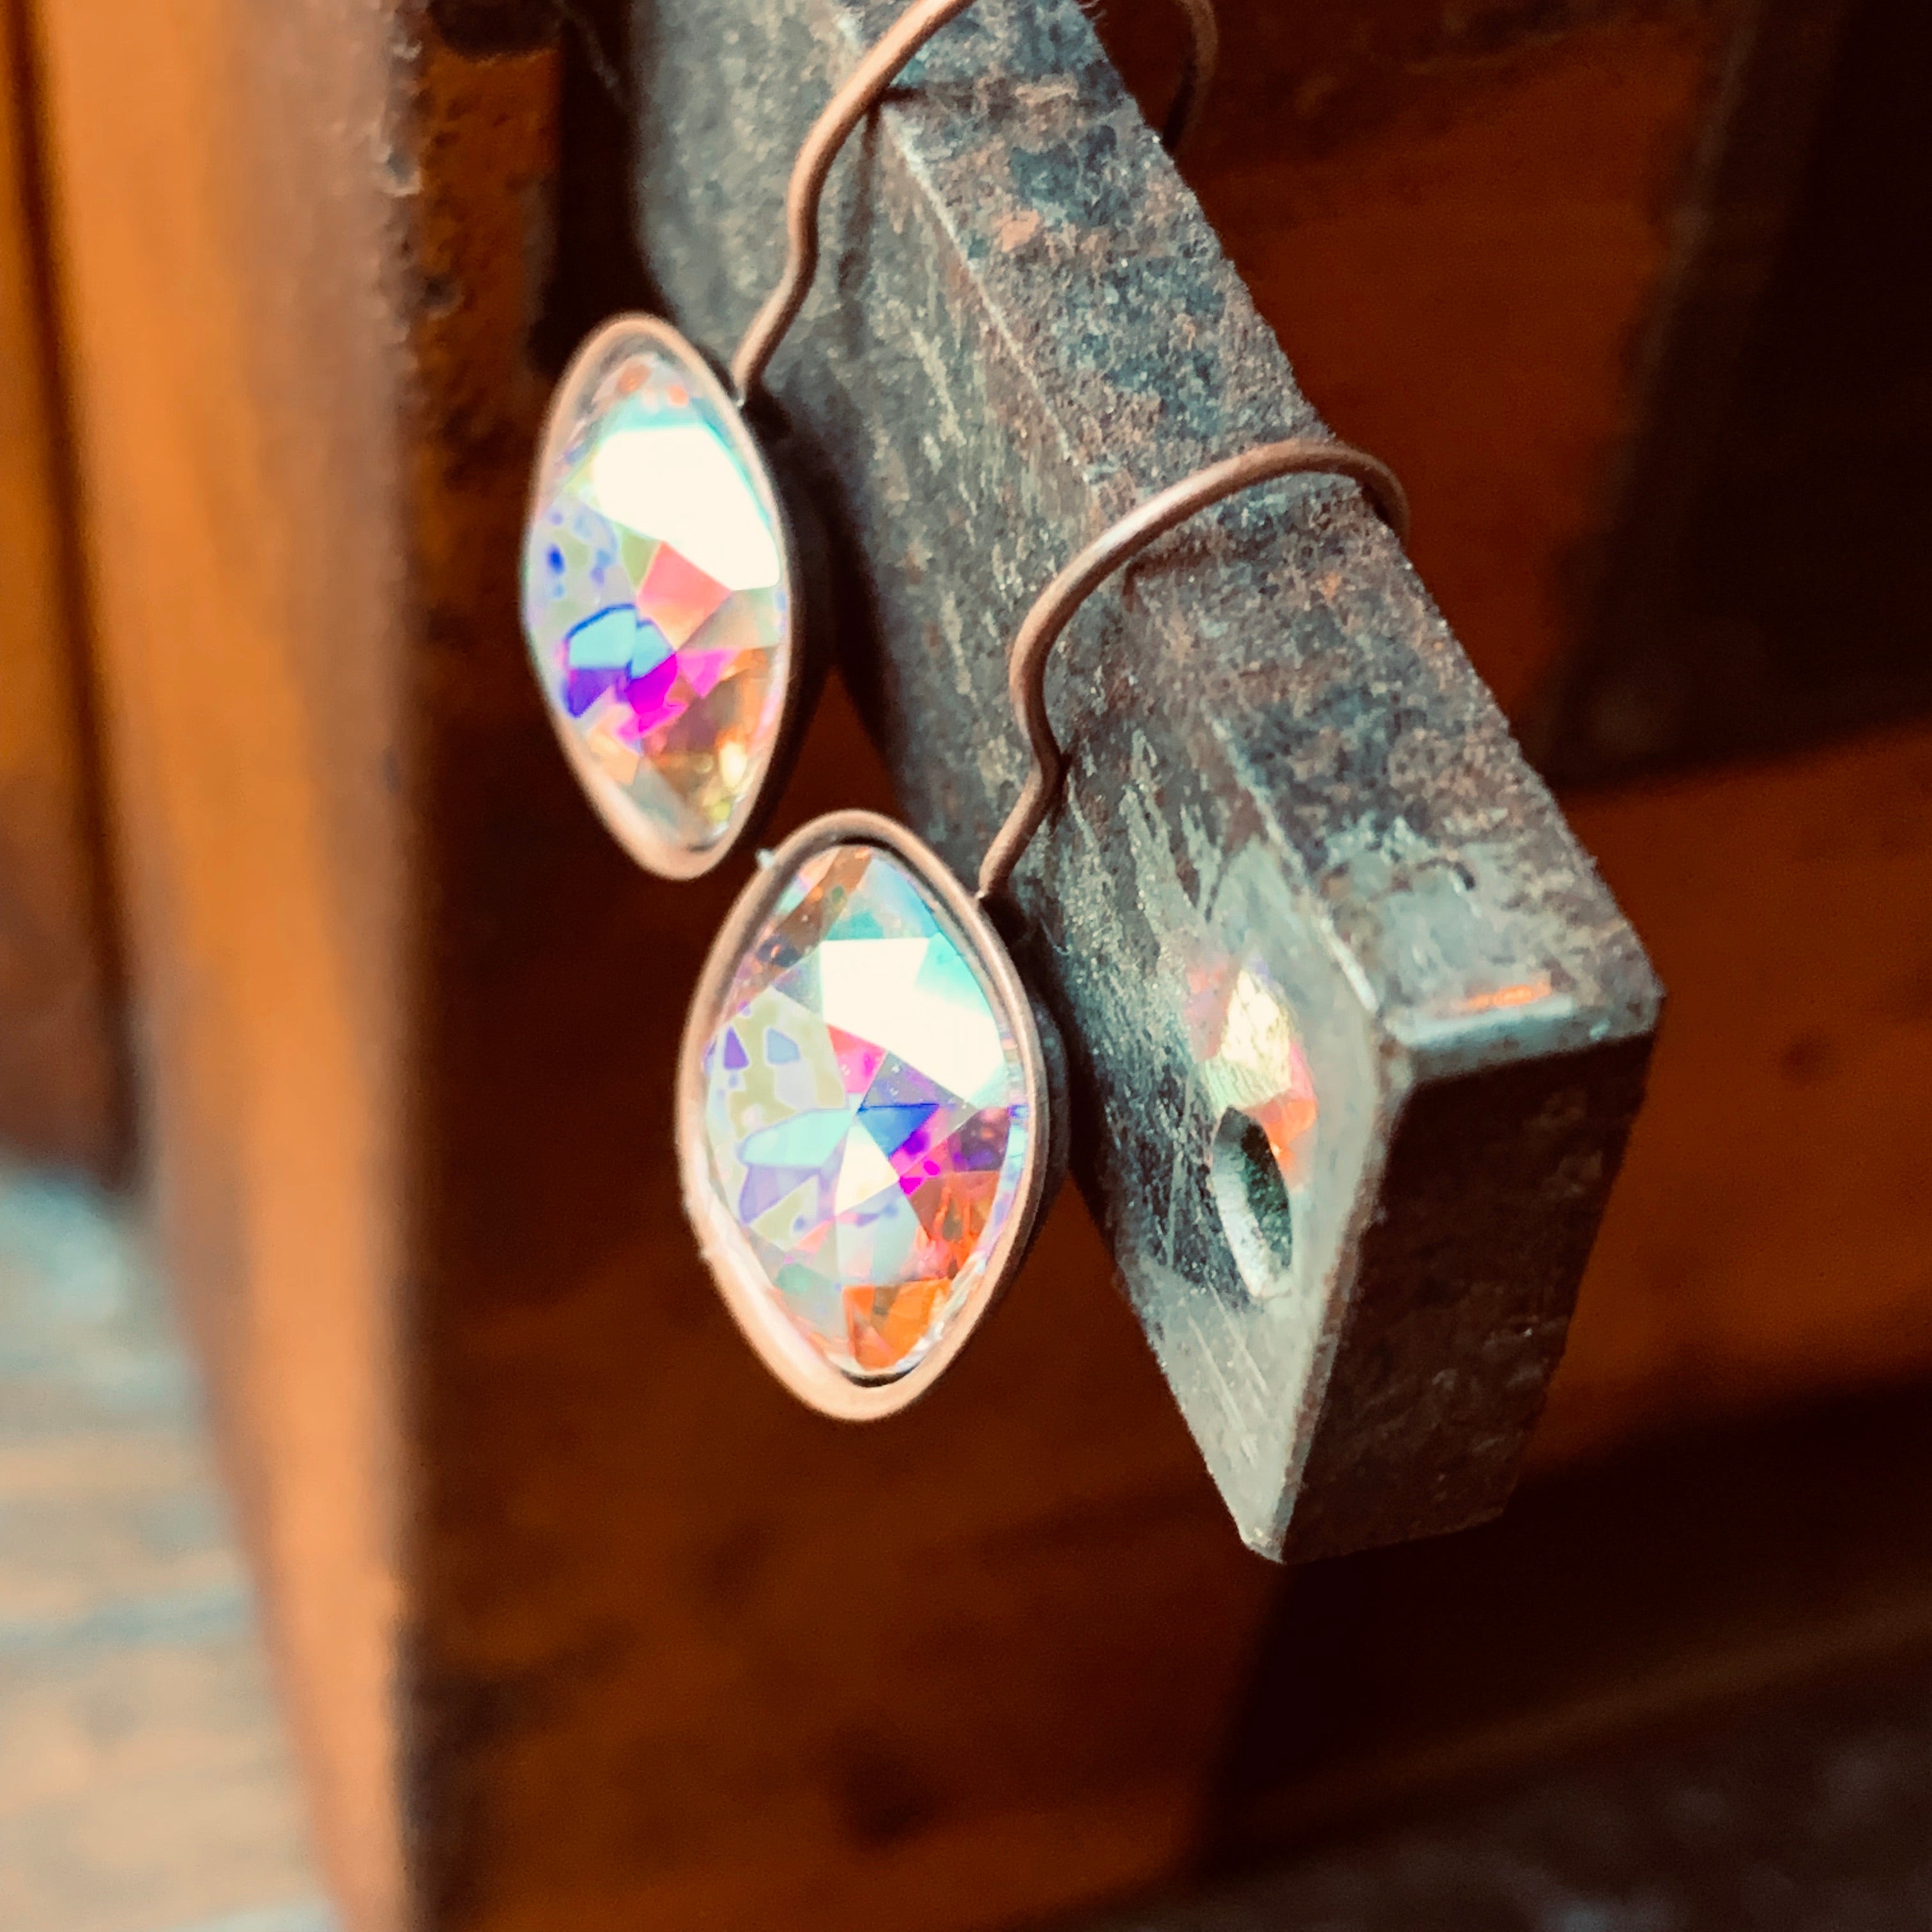 Handmade Antiqued Copper AB  Swarovski Crystal Earrings,Earrings - Dirt Road Divas Boutique